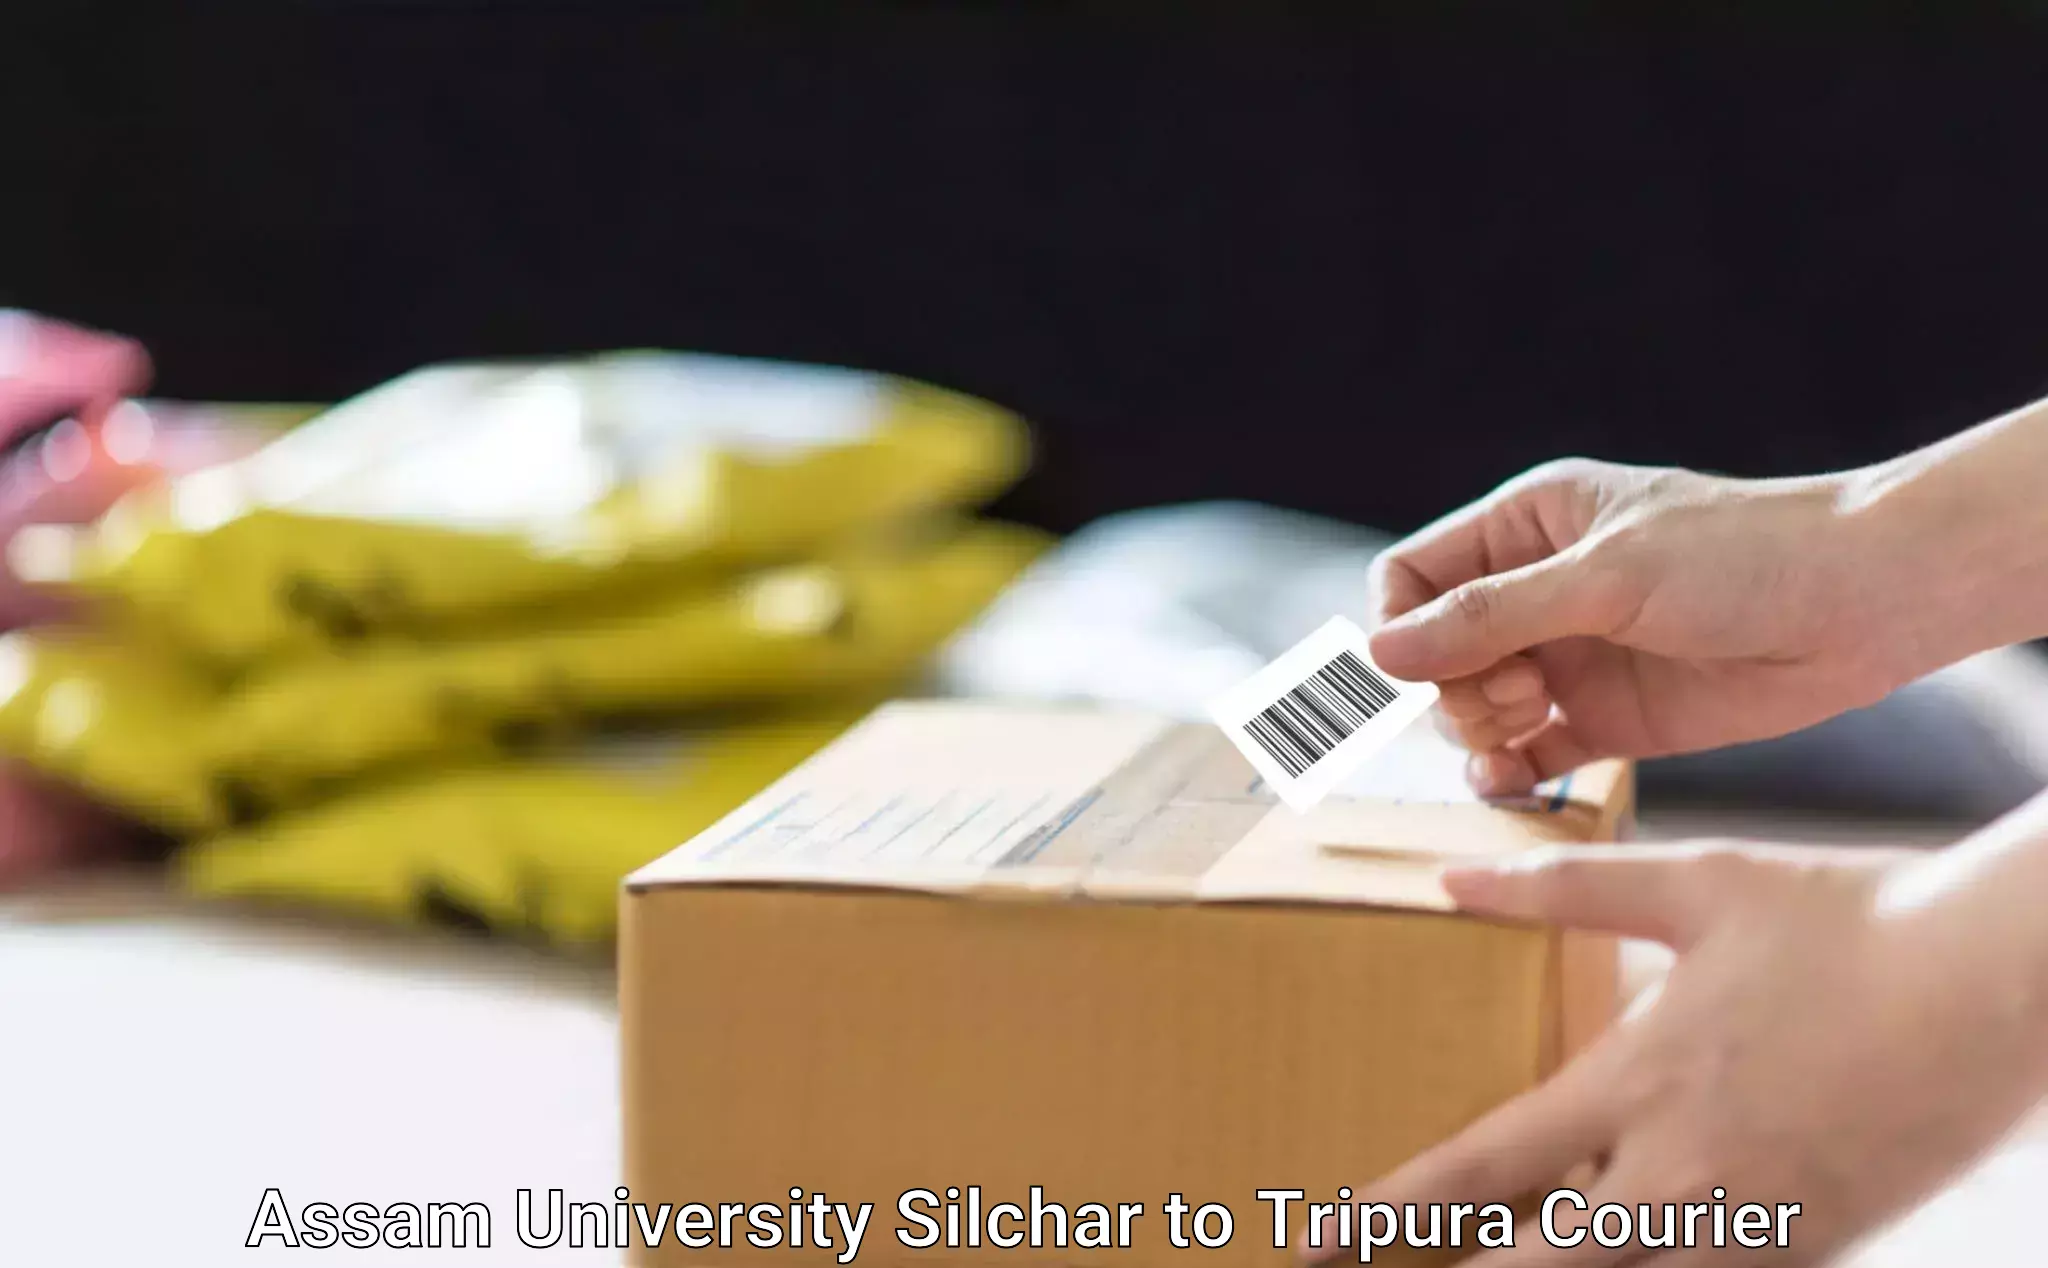 Courier service efficiency in Assam University Silchar to Agartala